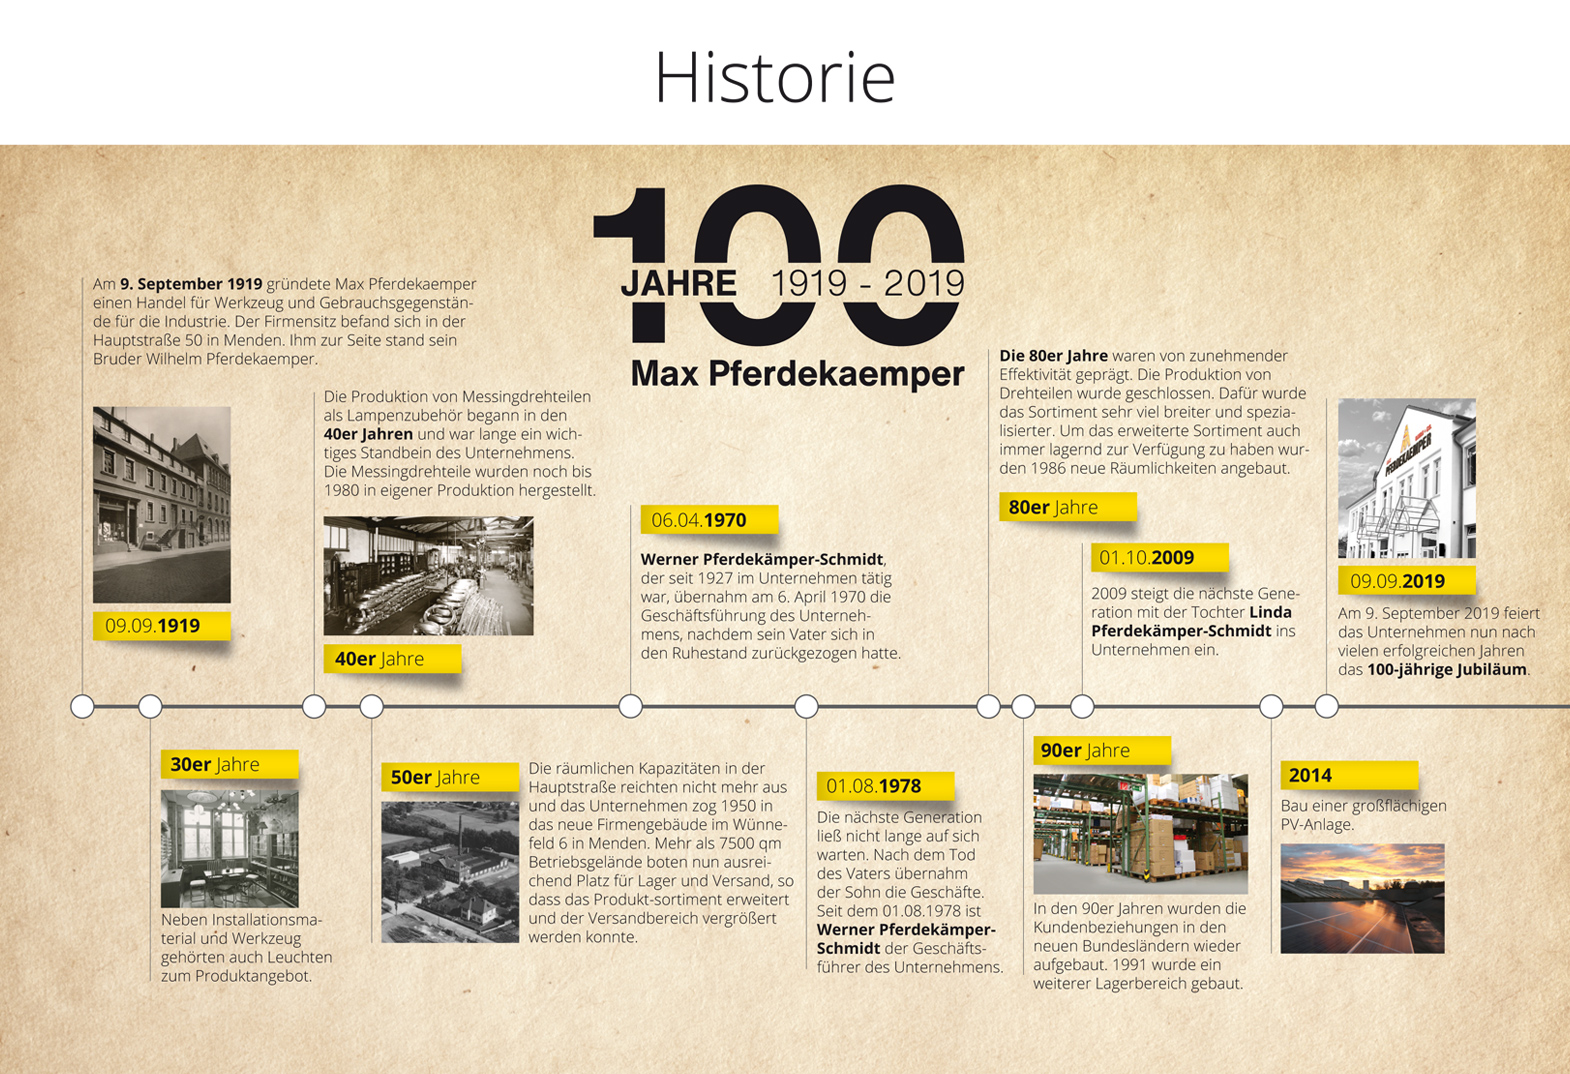 Historie Max Pferdekaemper